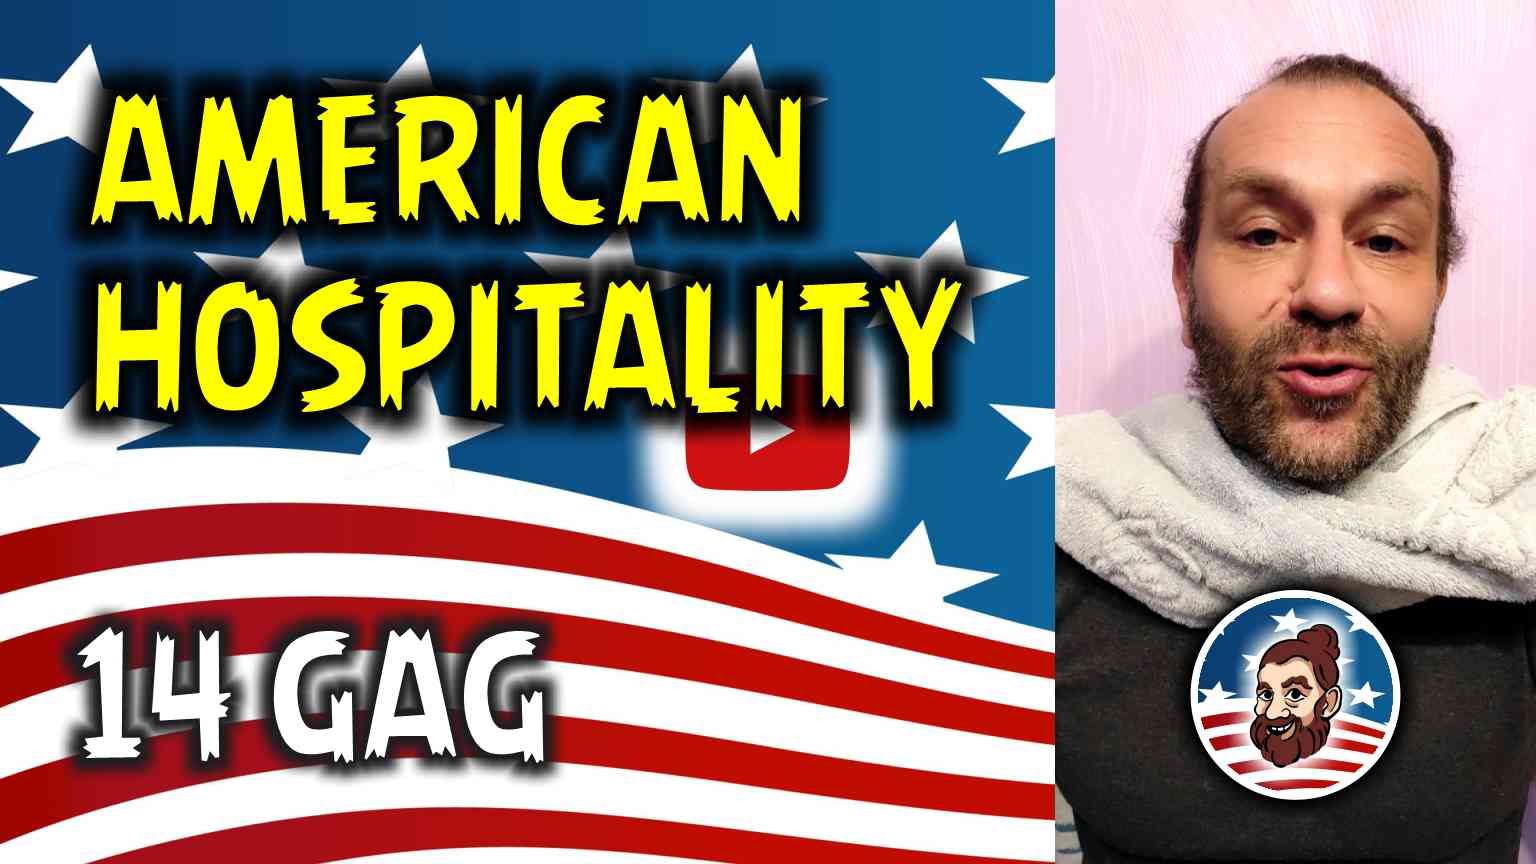 American hospitality